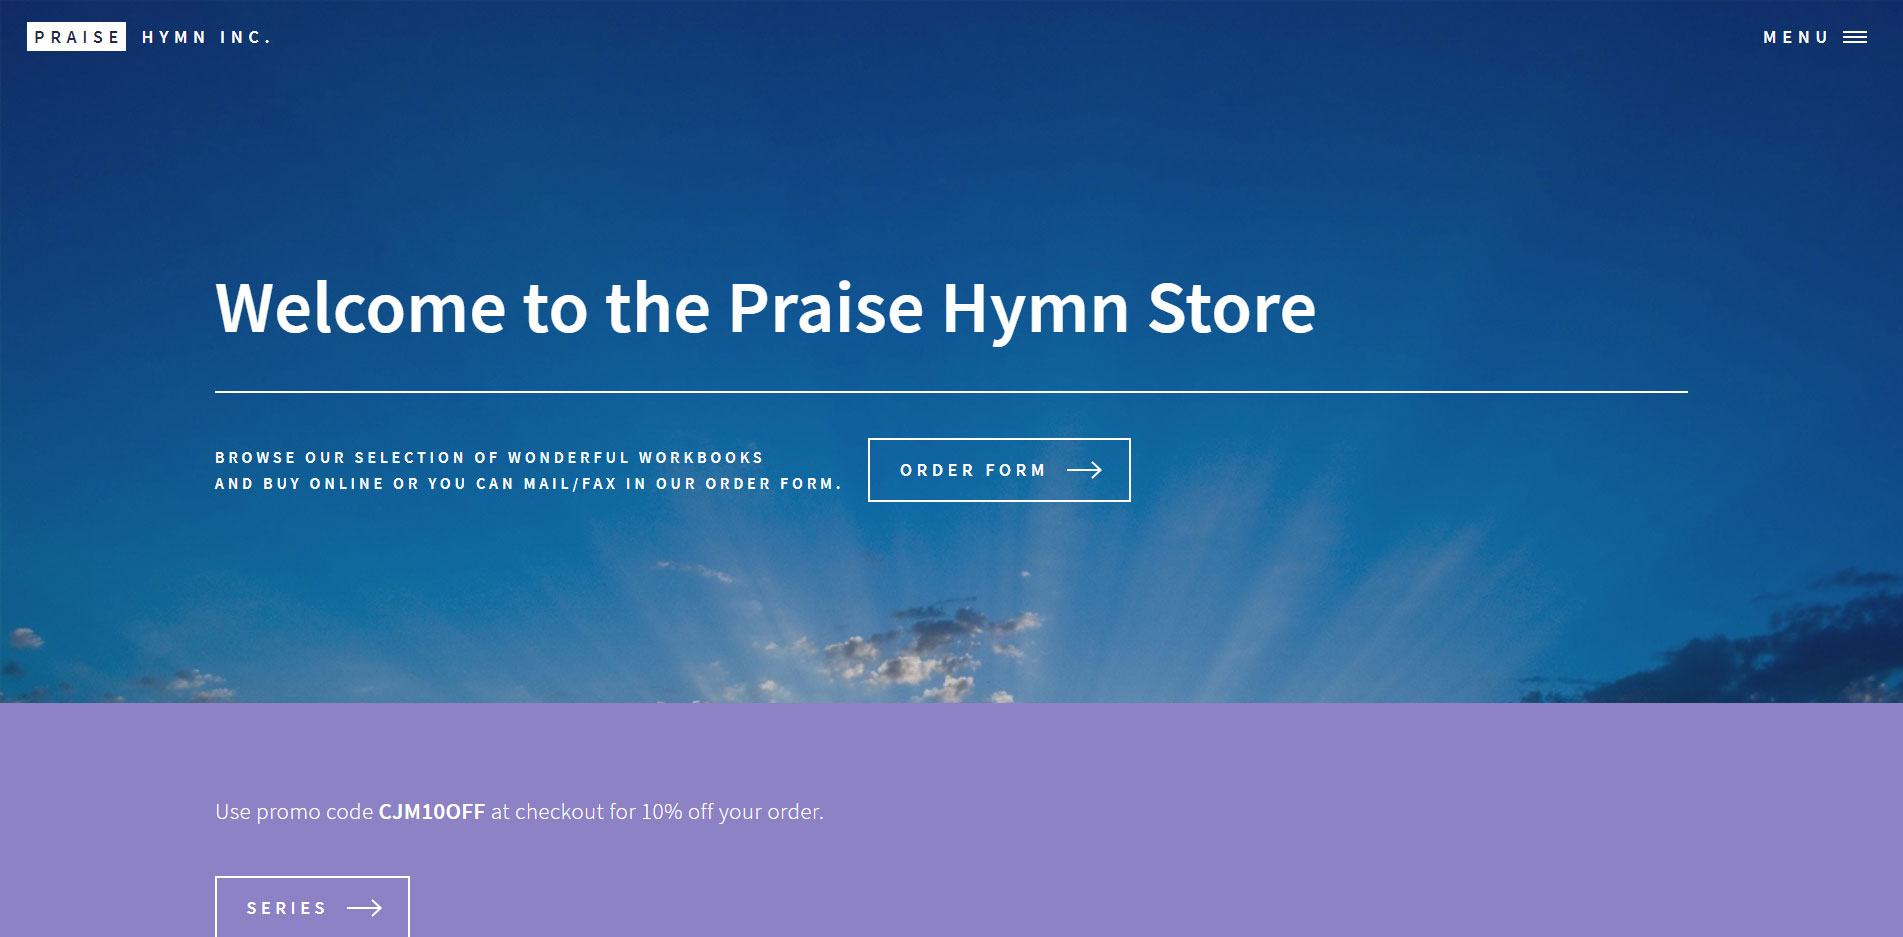 Available Design Praise Hymn Inc Portfolio Image